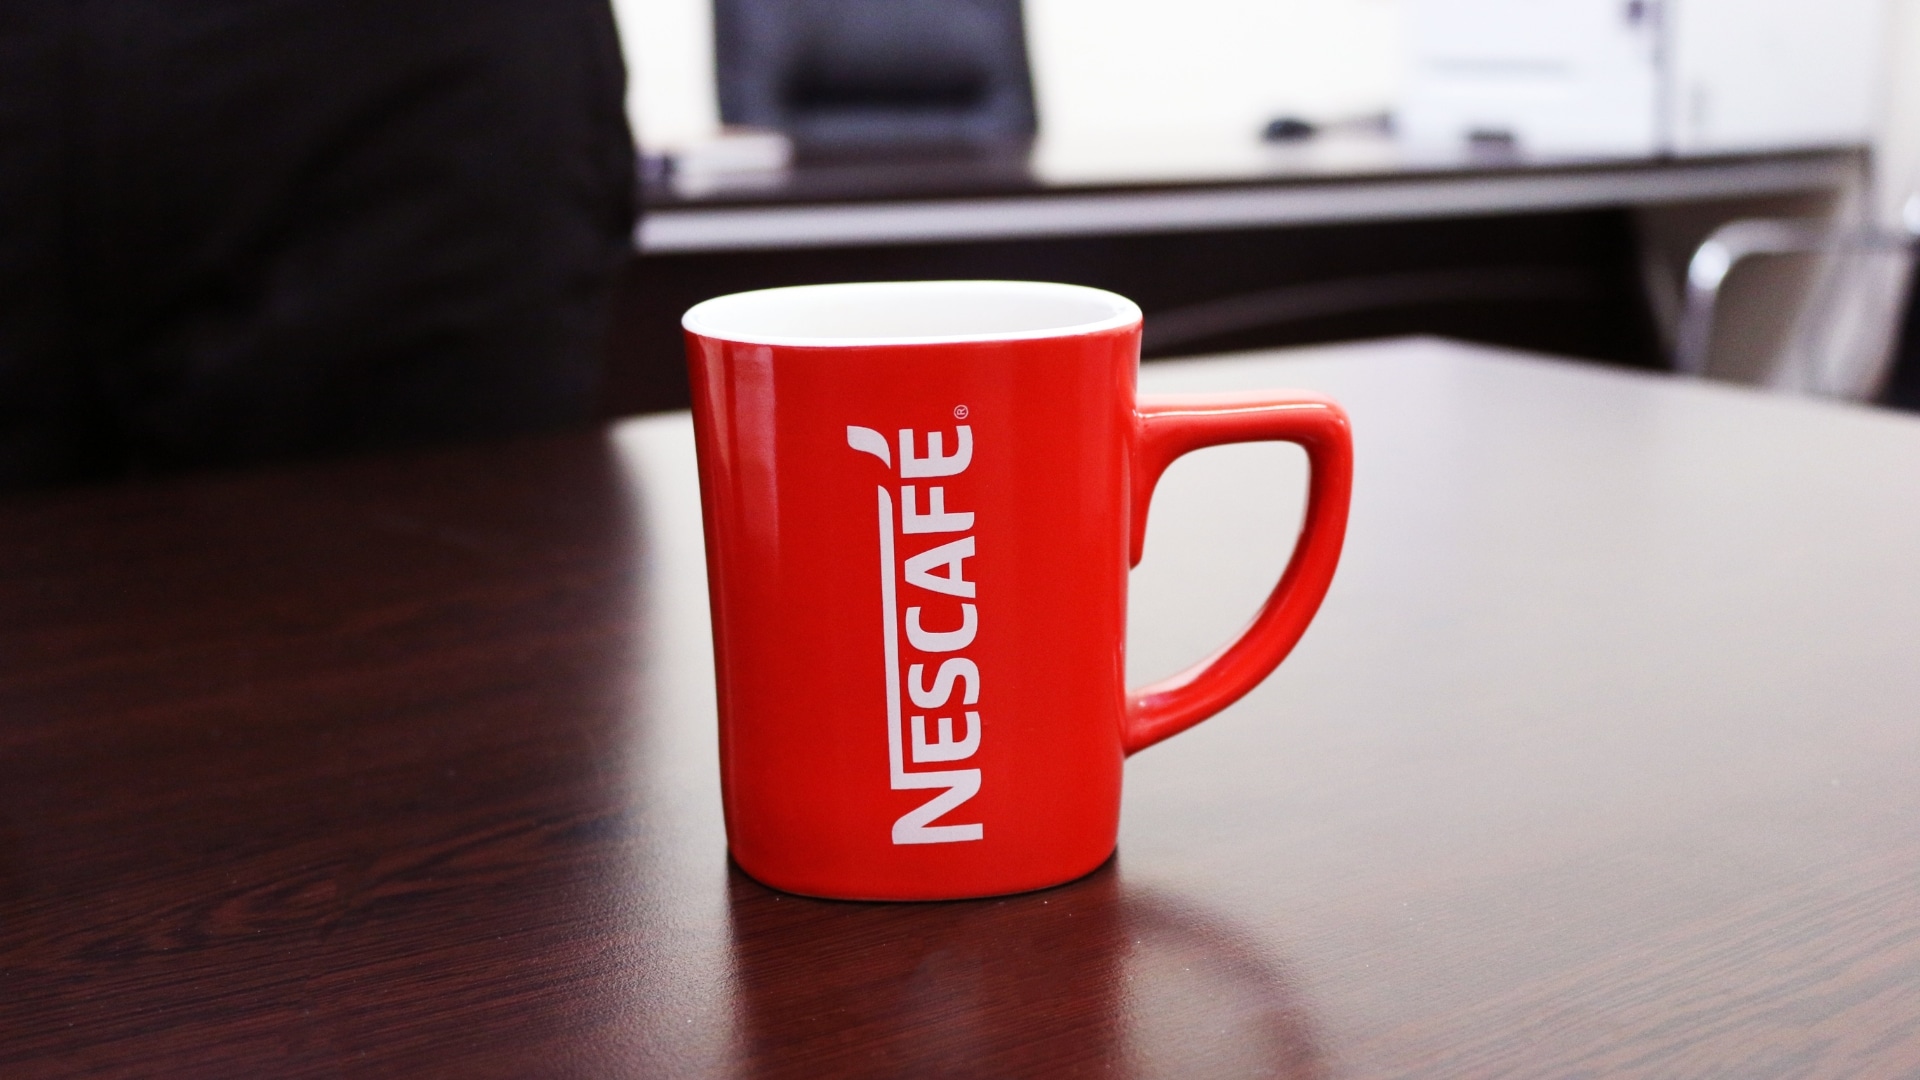 nestle nescafe coffee mug